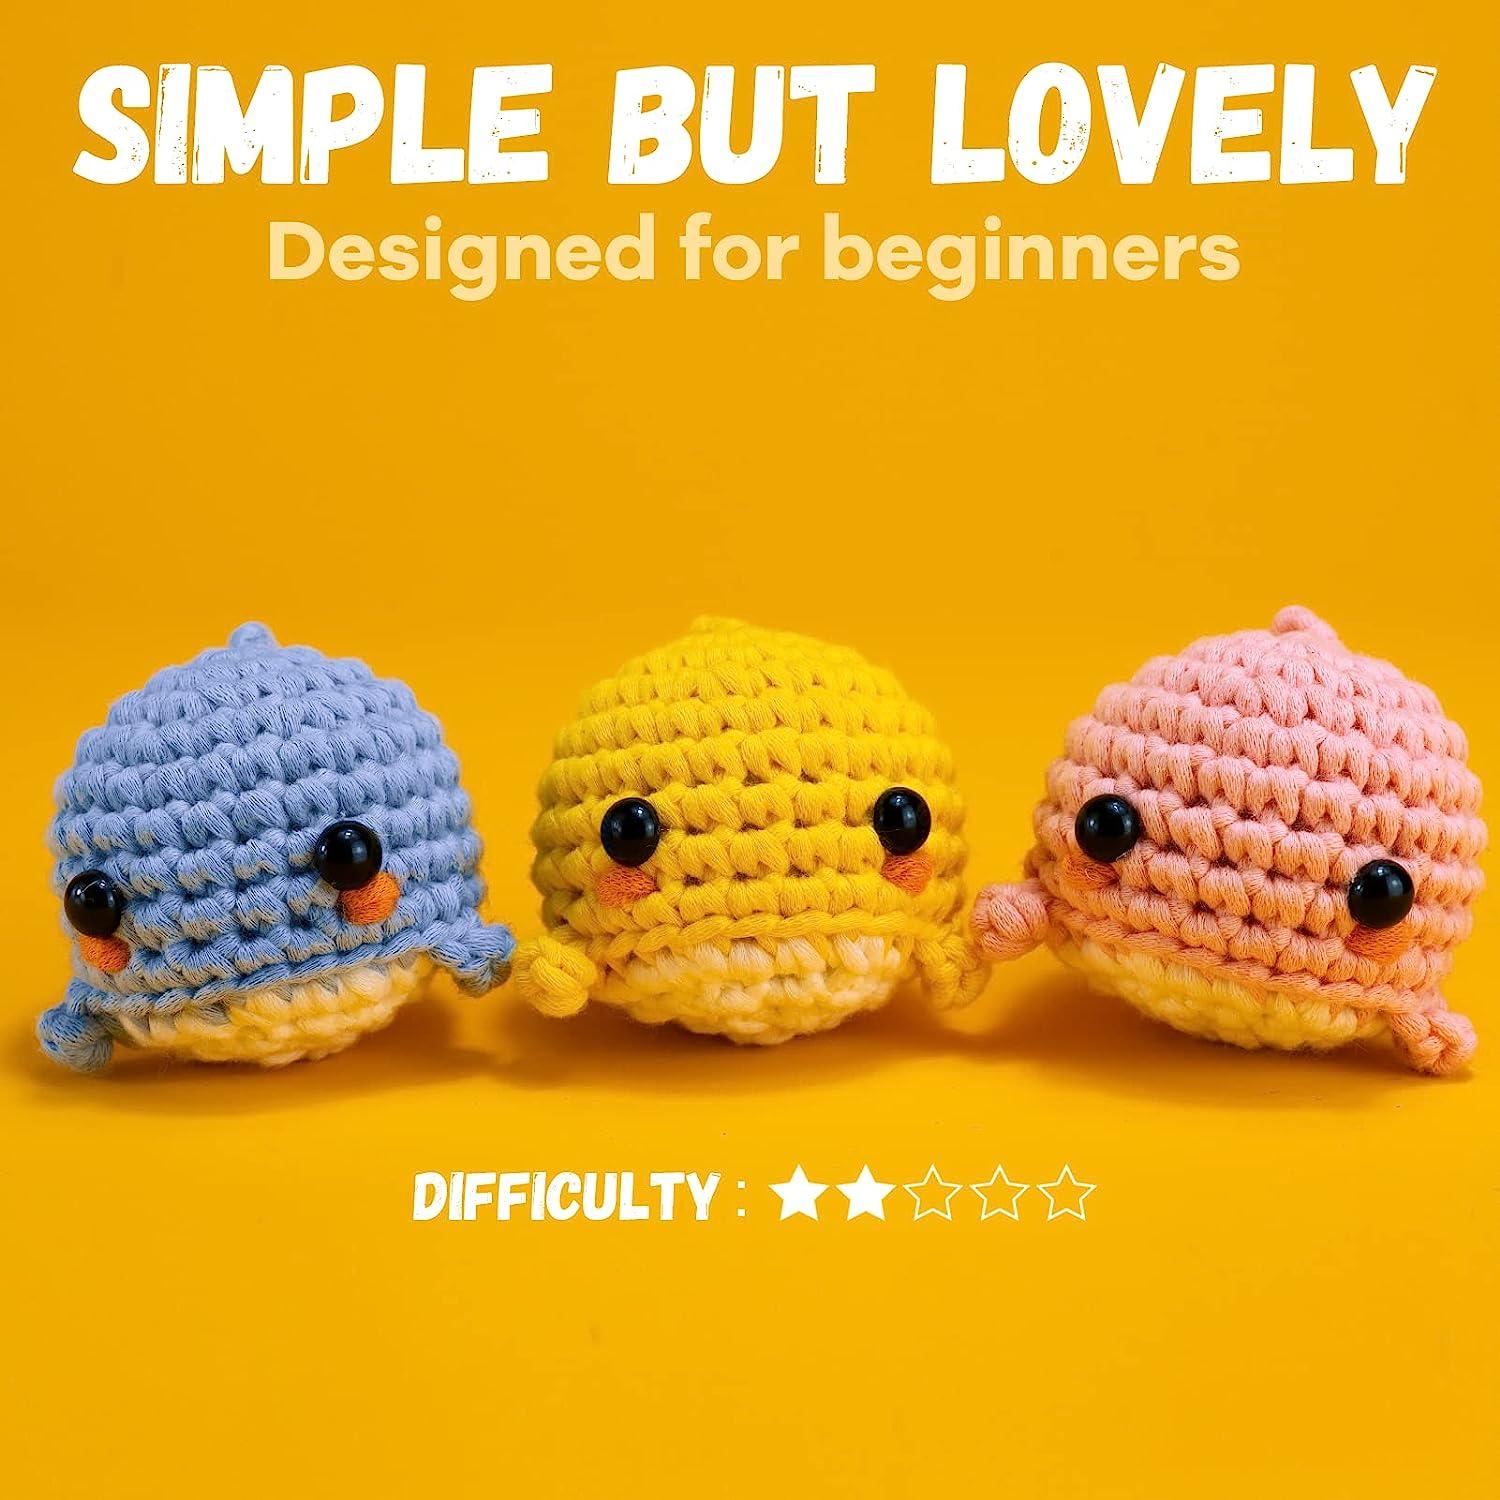 Top 3 Crochet Animal Kits & Patterns